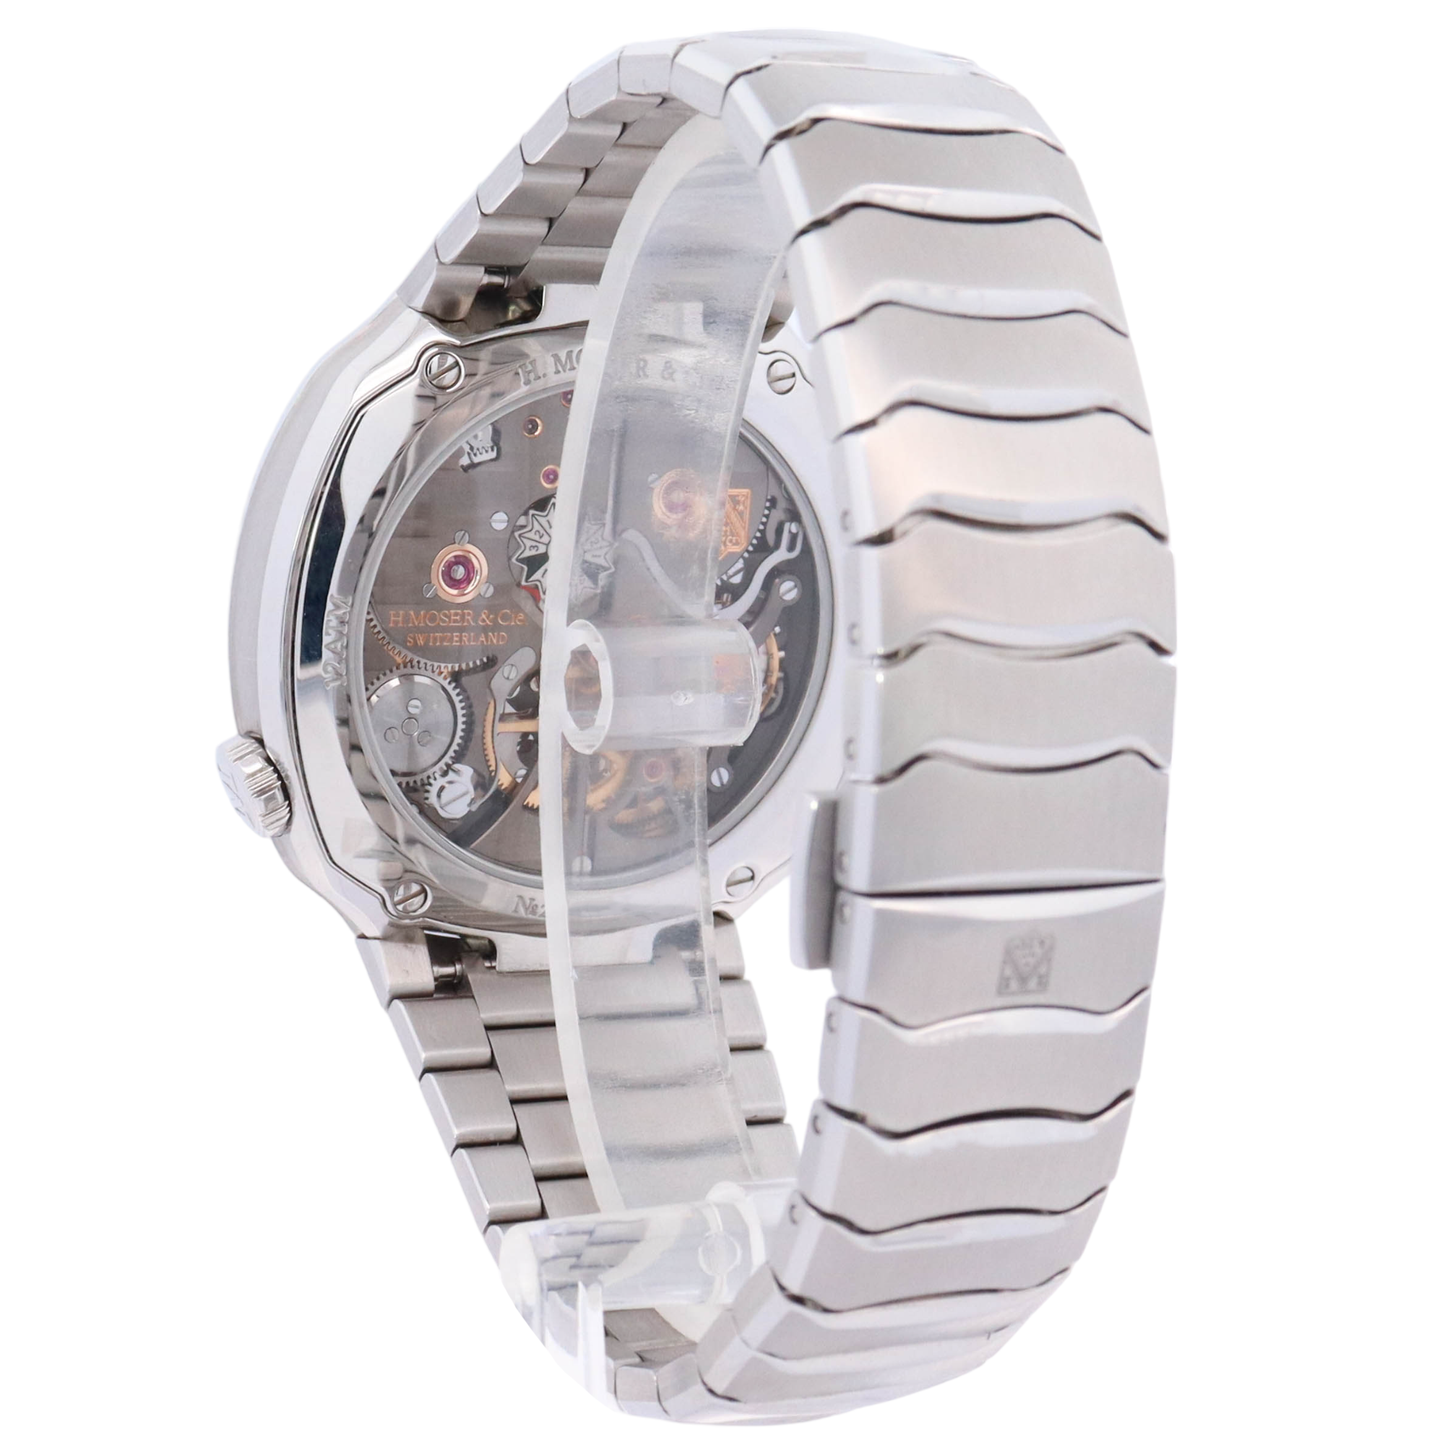 H. Moser & Cie Streamliner Perpetual Calendar 42.3mm Gray Sunburst Dial Watch Reference# 6812-1200 - Happy Jewelers Fine Jewelry Lifetime Warranty